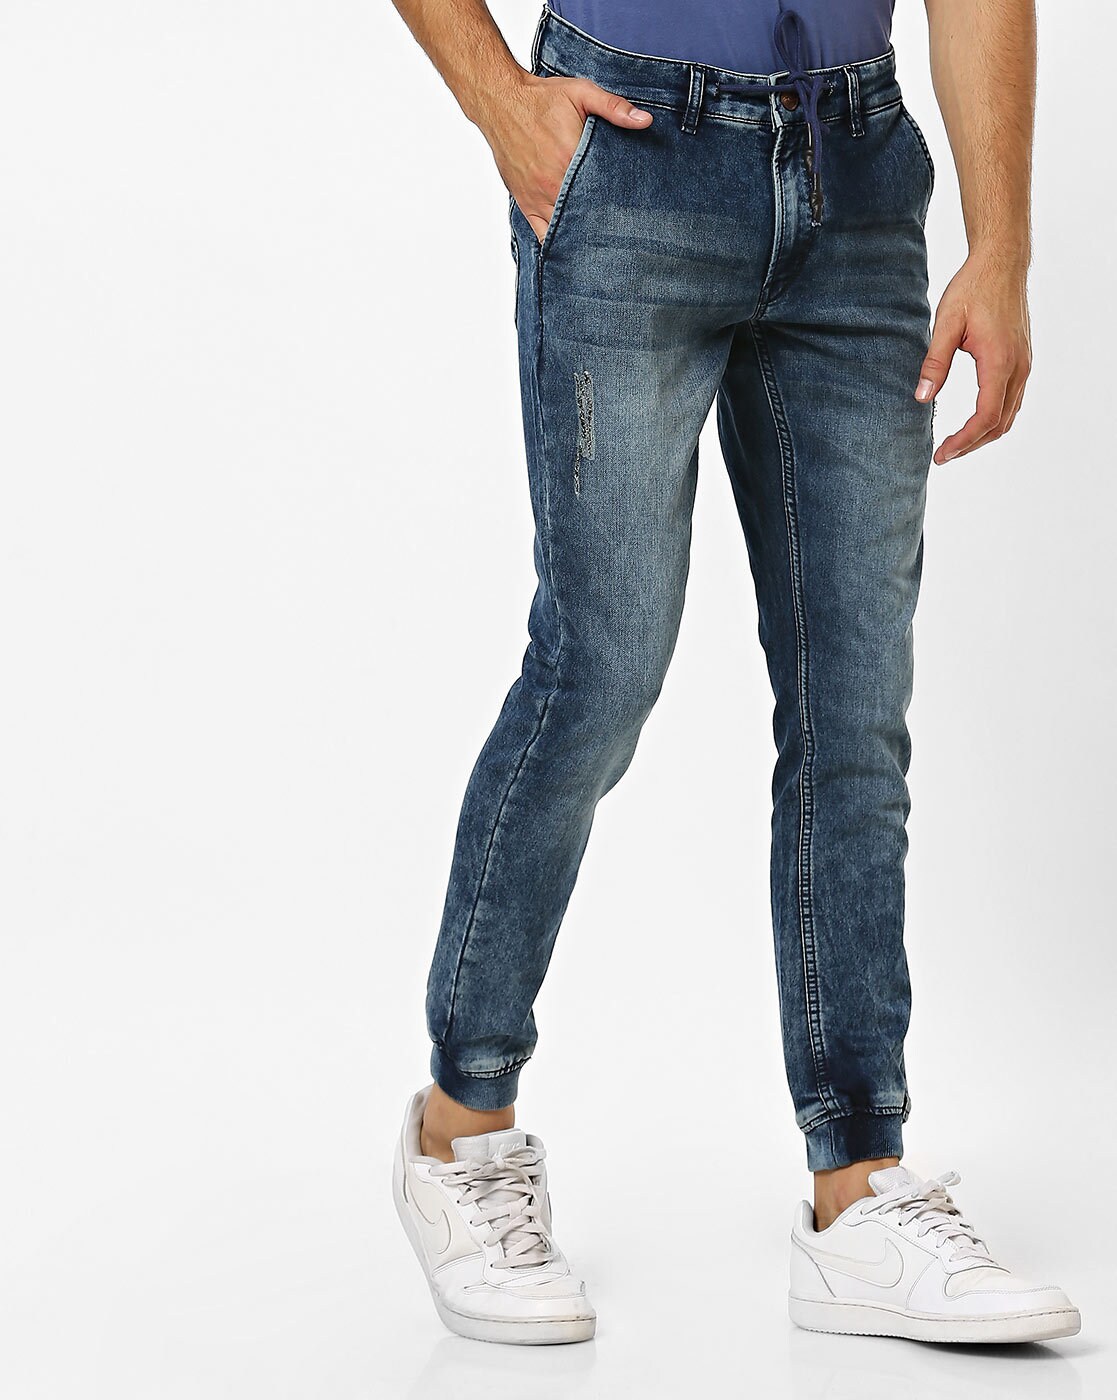 numero uno jeans online